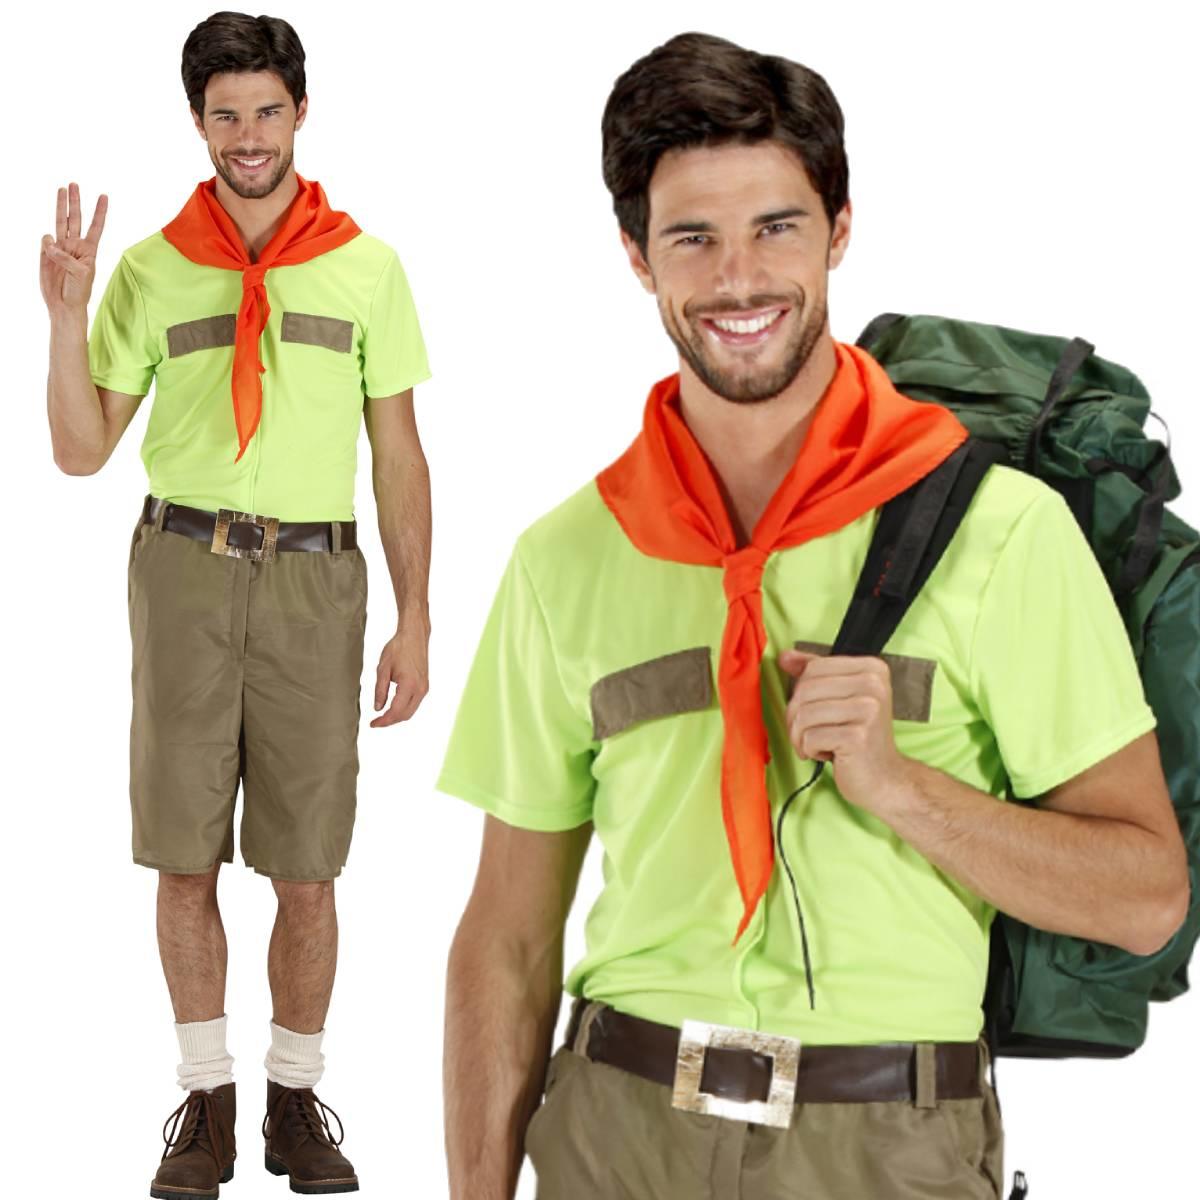 Boy Scout Fancy Dress Costume for Men by Widmann 7607 from Karnival Costumes online party shop